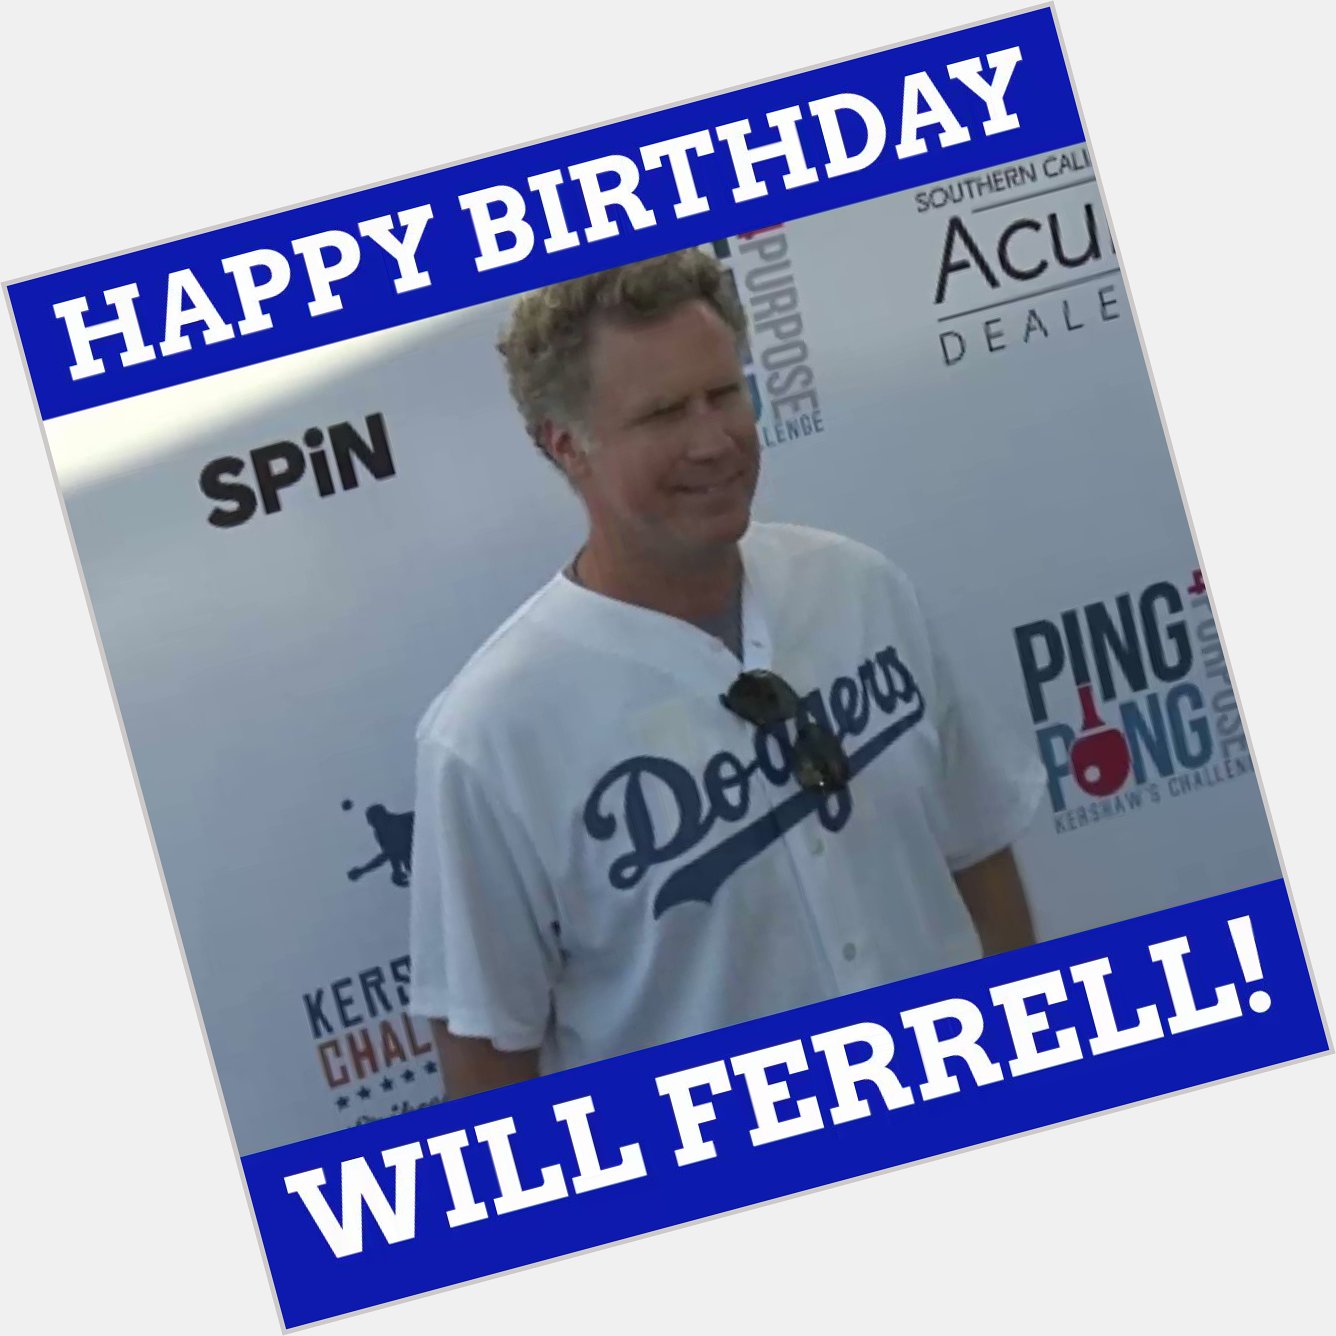 Happy birthday, Will Ferrell!  